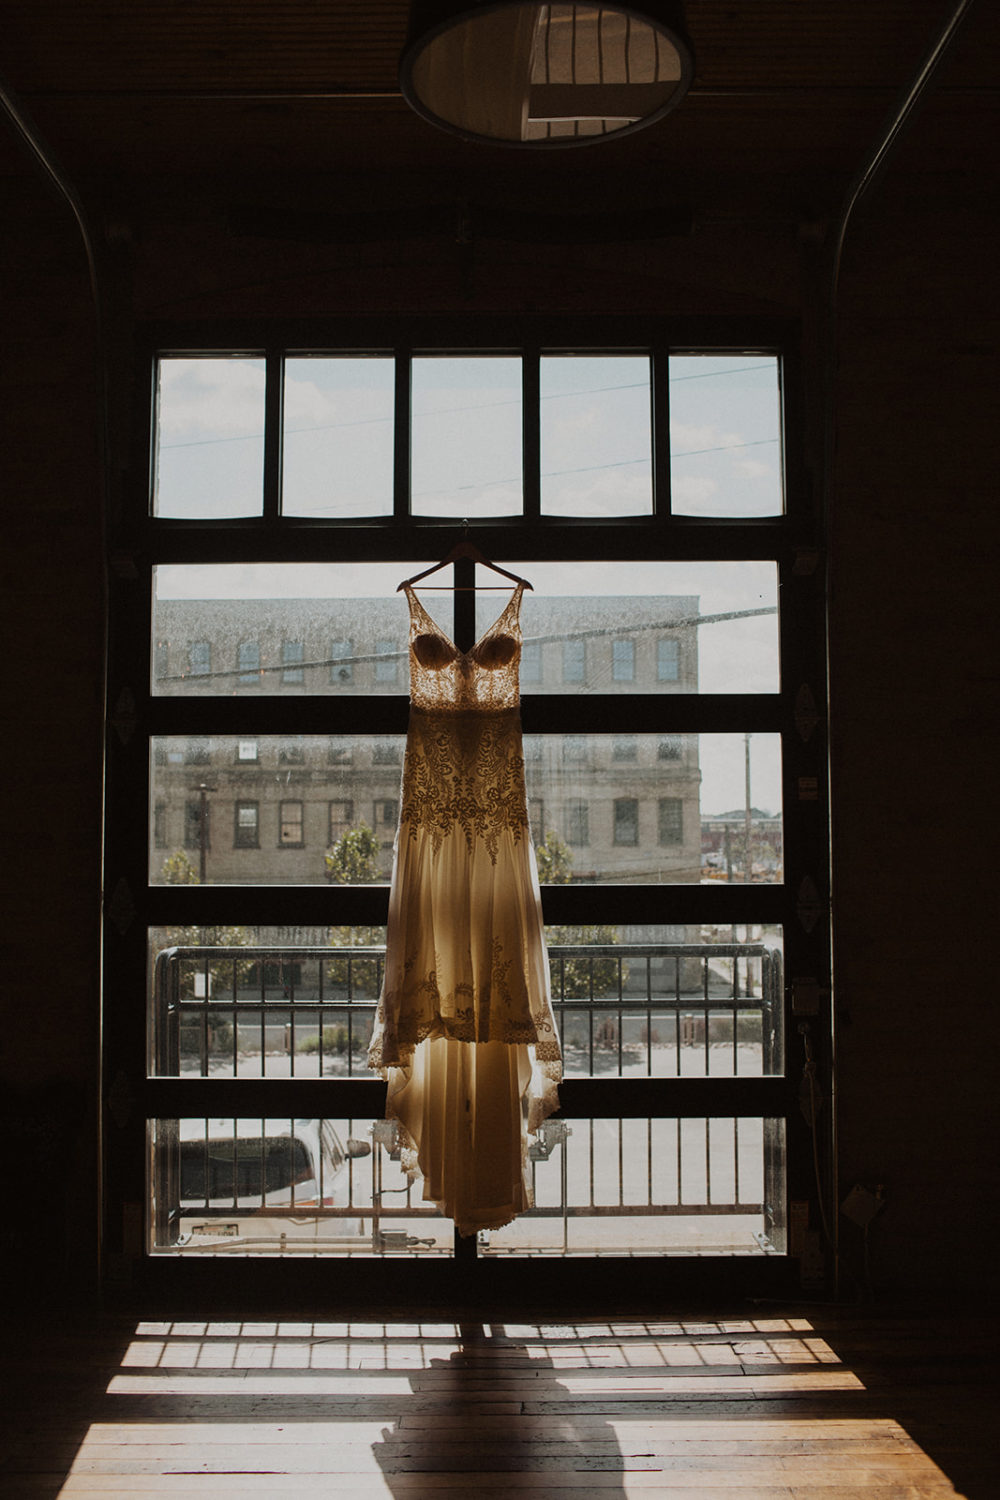 Wedding dress hangs on window with light shining through it